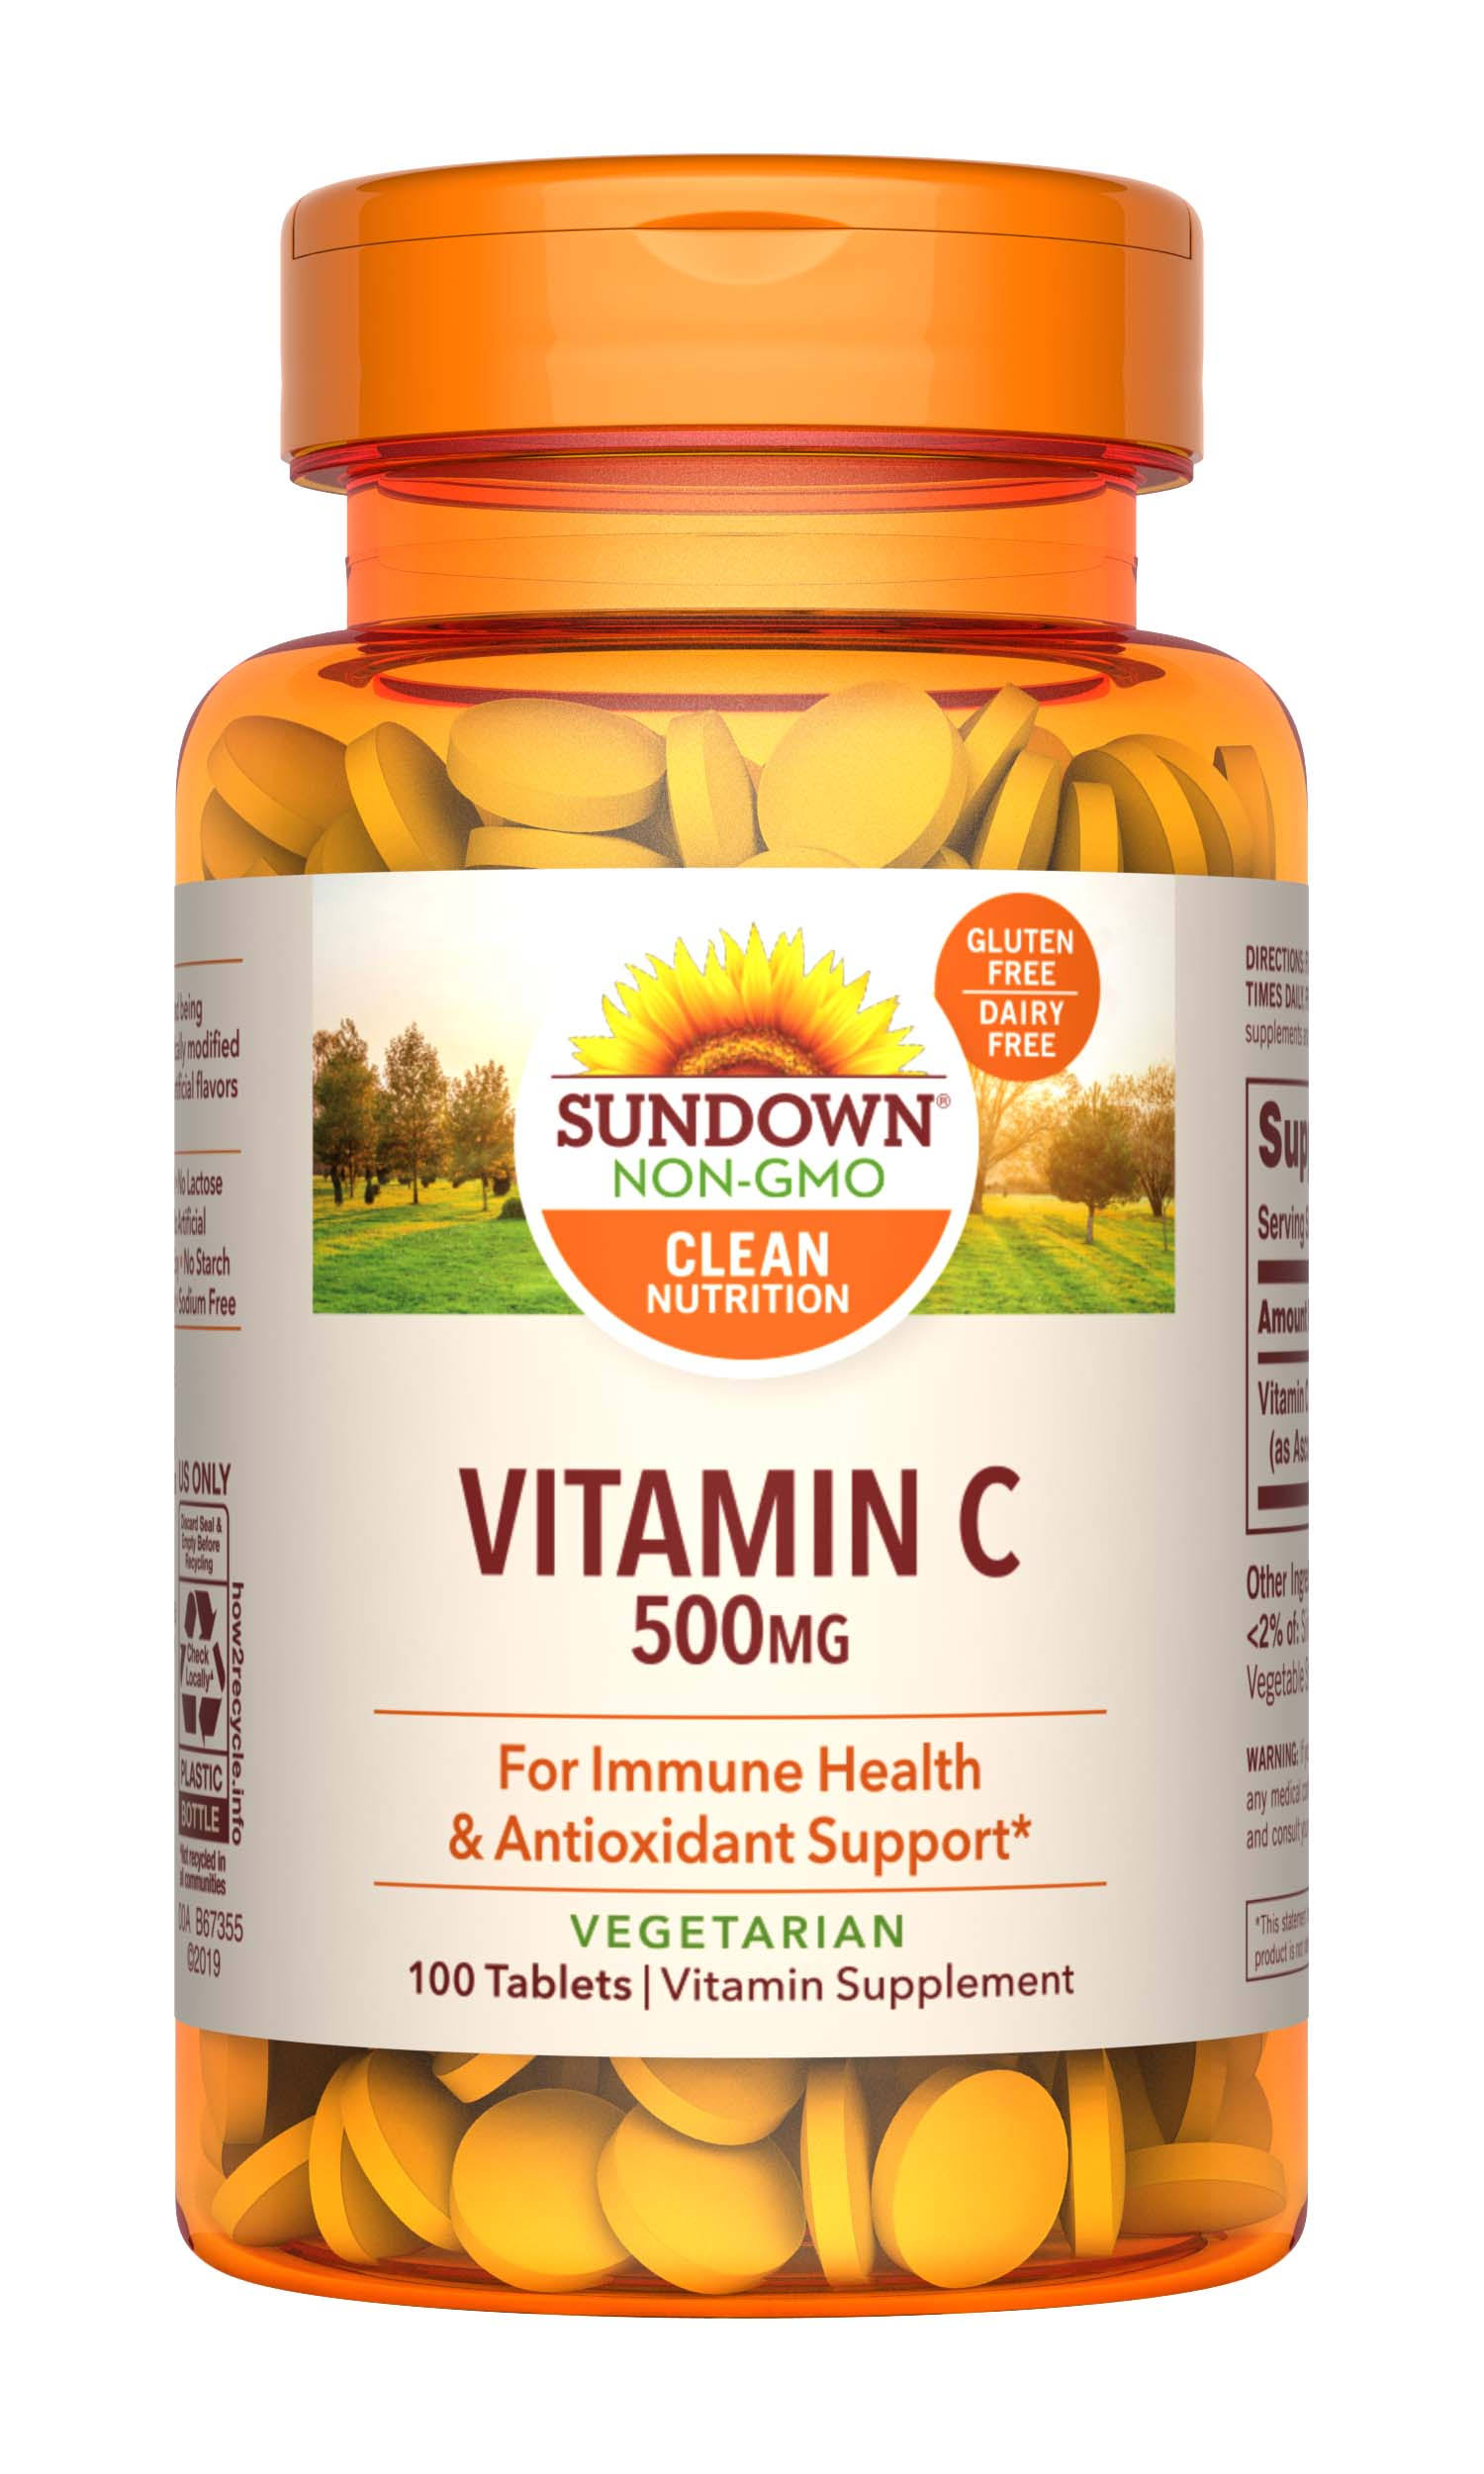 Sundown Naturals High Potency Vitamin C - 500mg, 100 Tablets